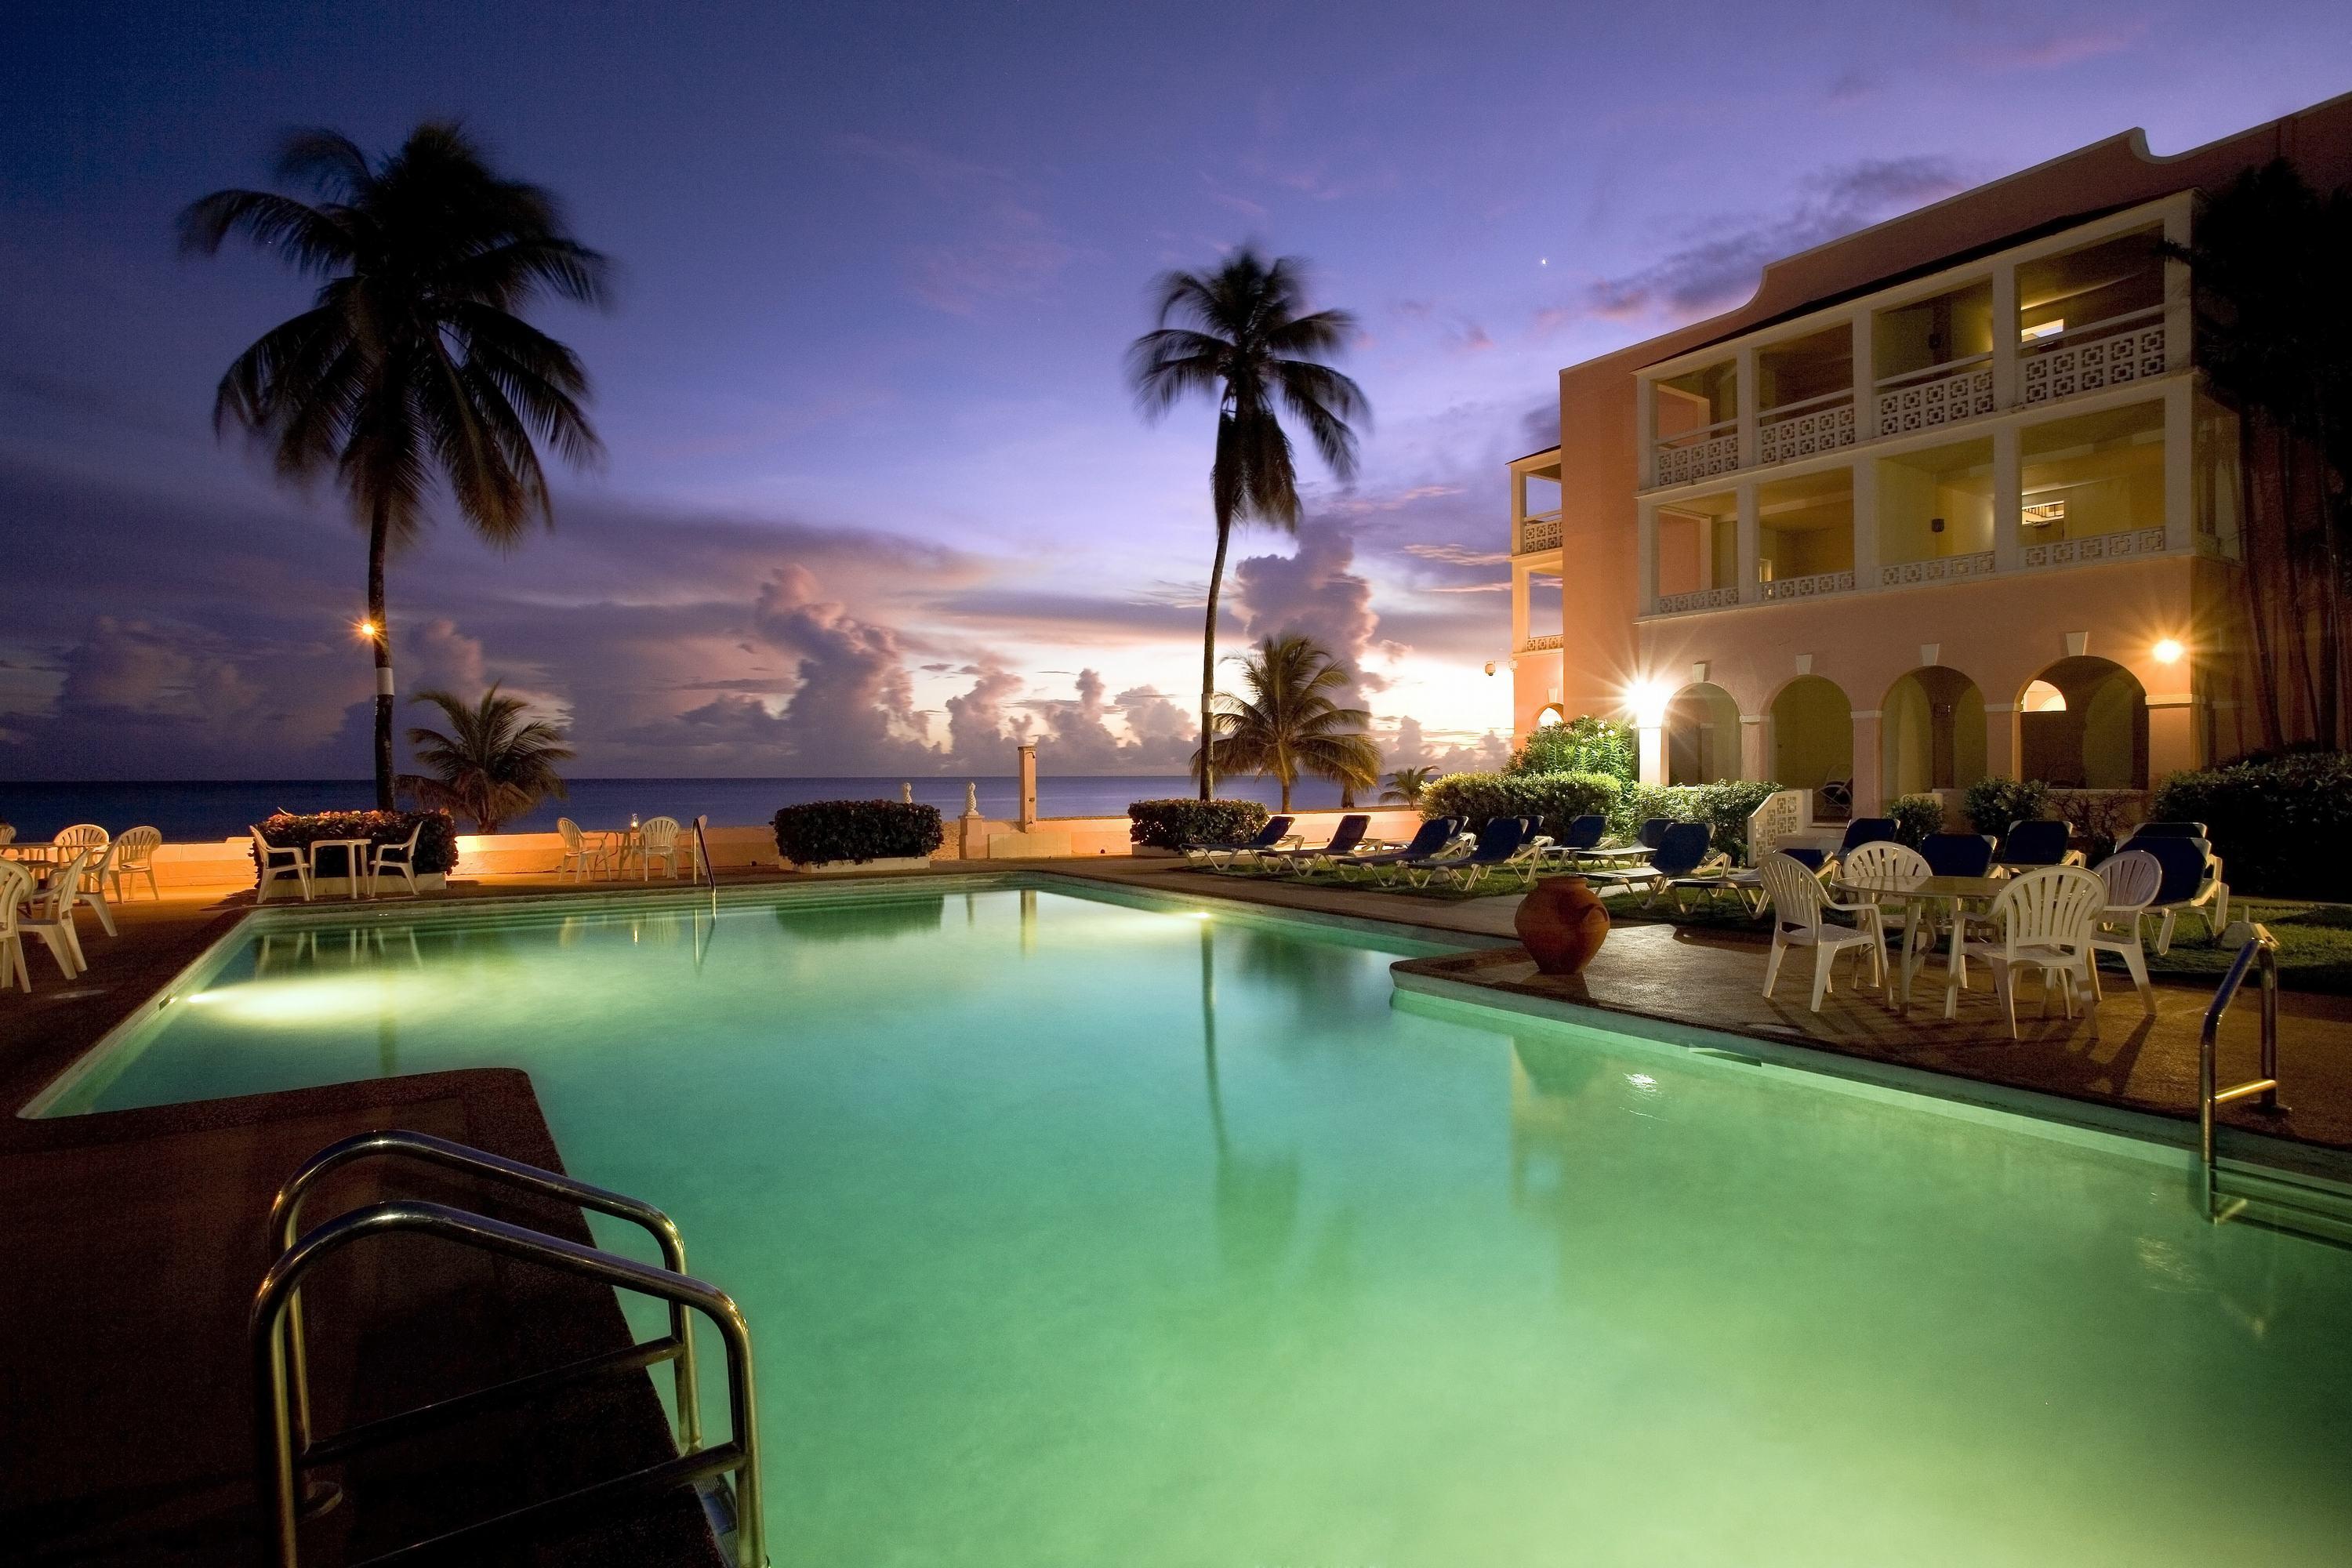 Southern Palms Beach Club & Resort Hotel image